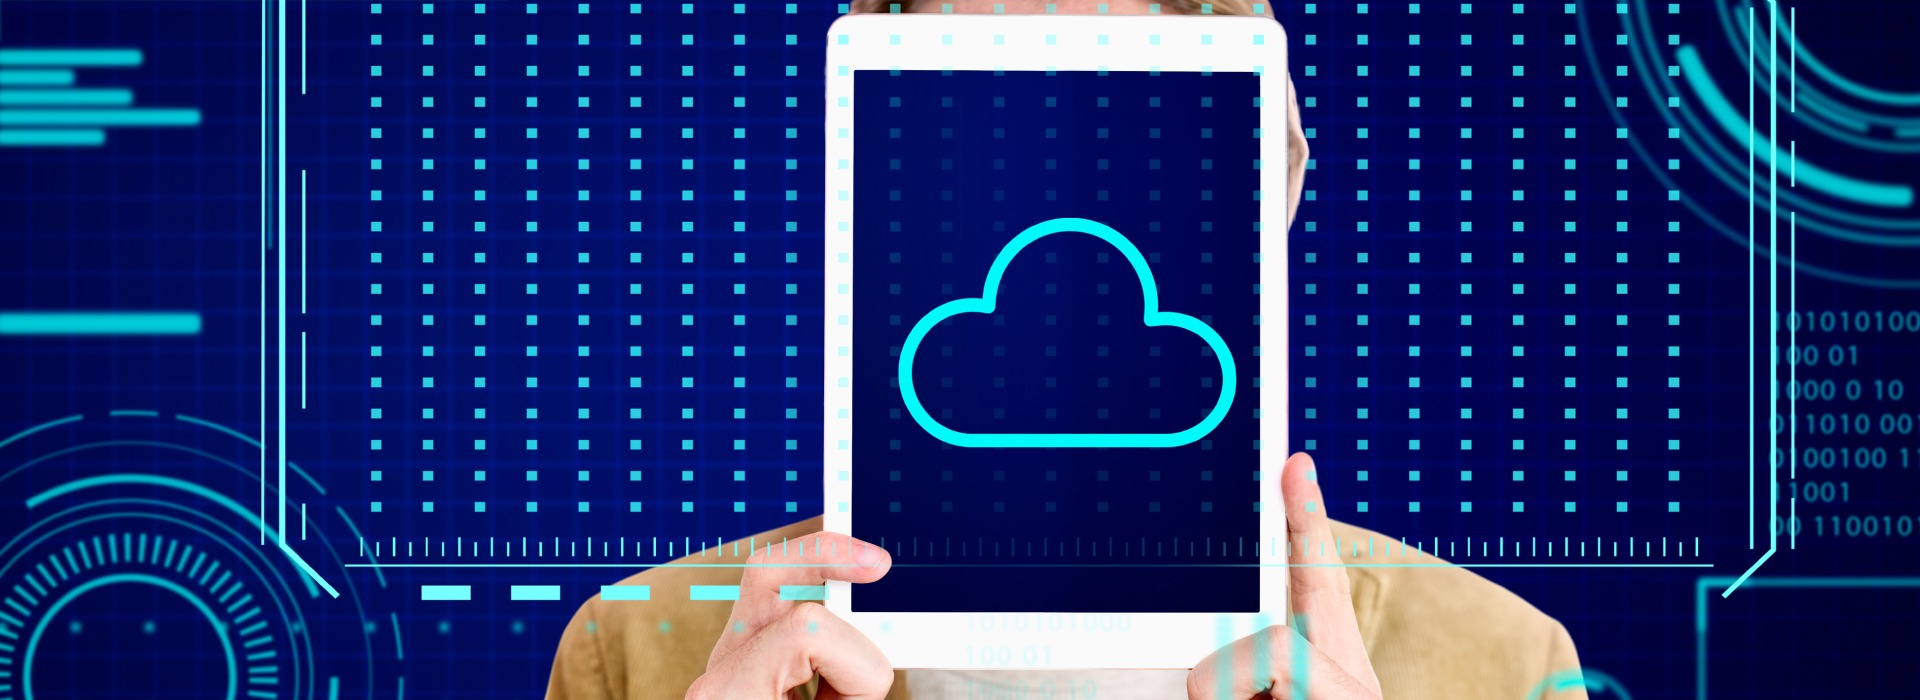 La importancia de la  Nube en la era digital